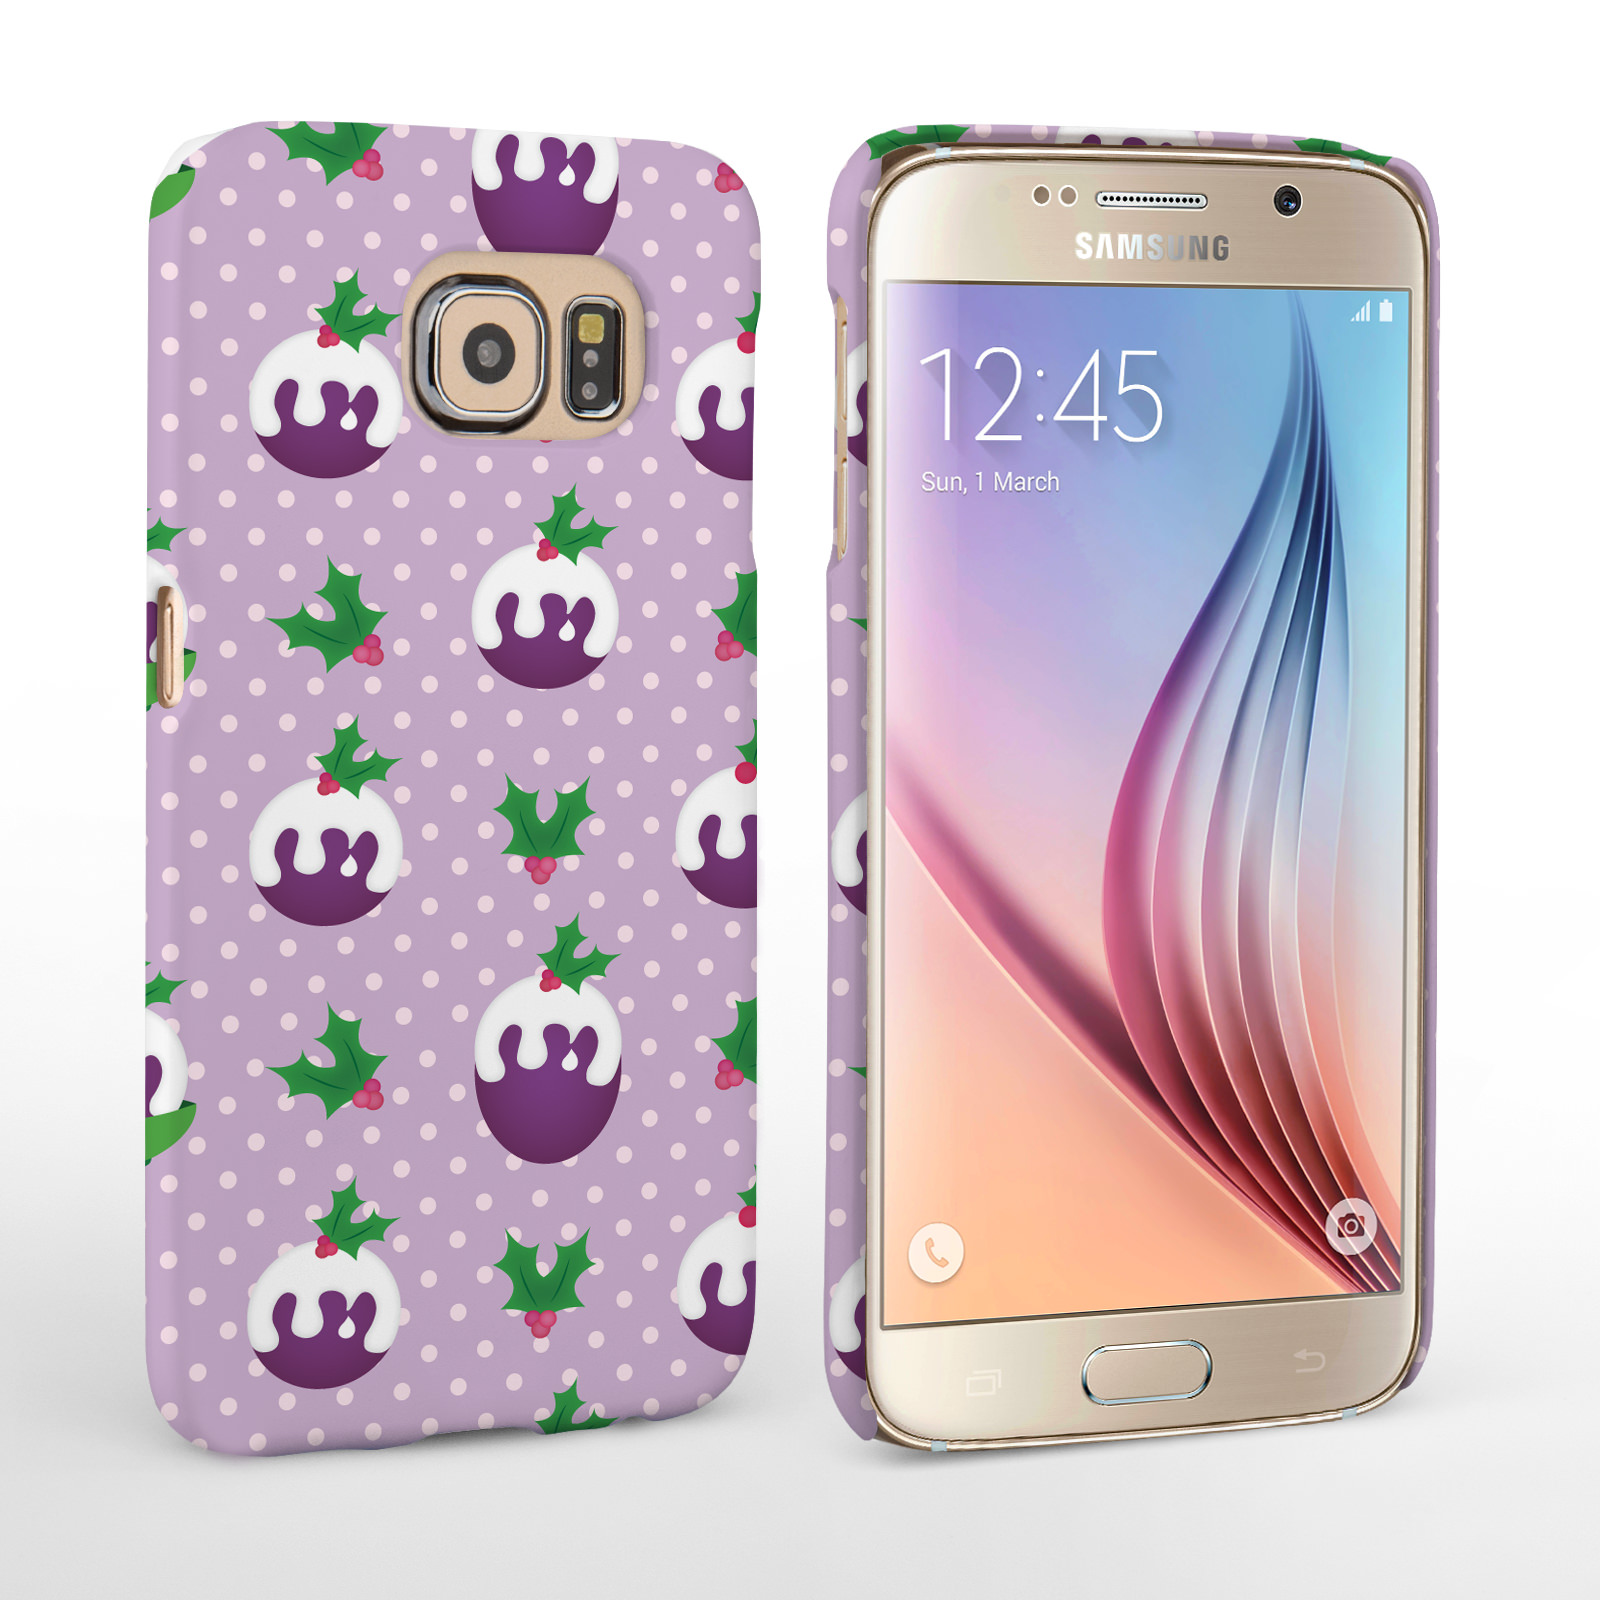 Caseflex Samsung Galaxy S6 Christmas Pudding Hard Case - Purple